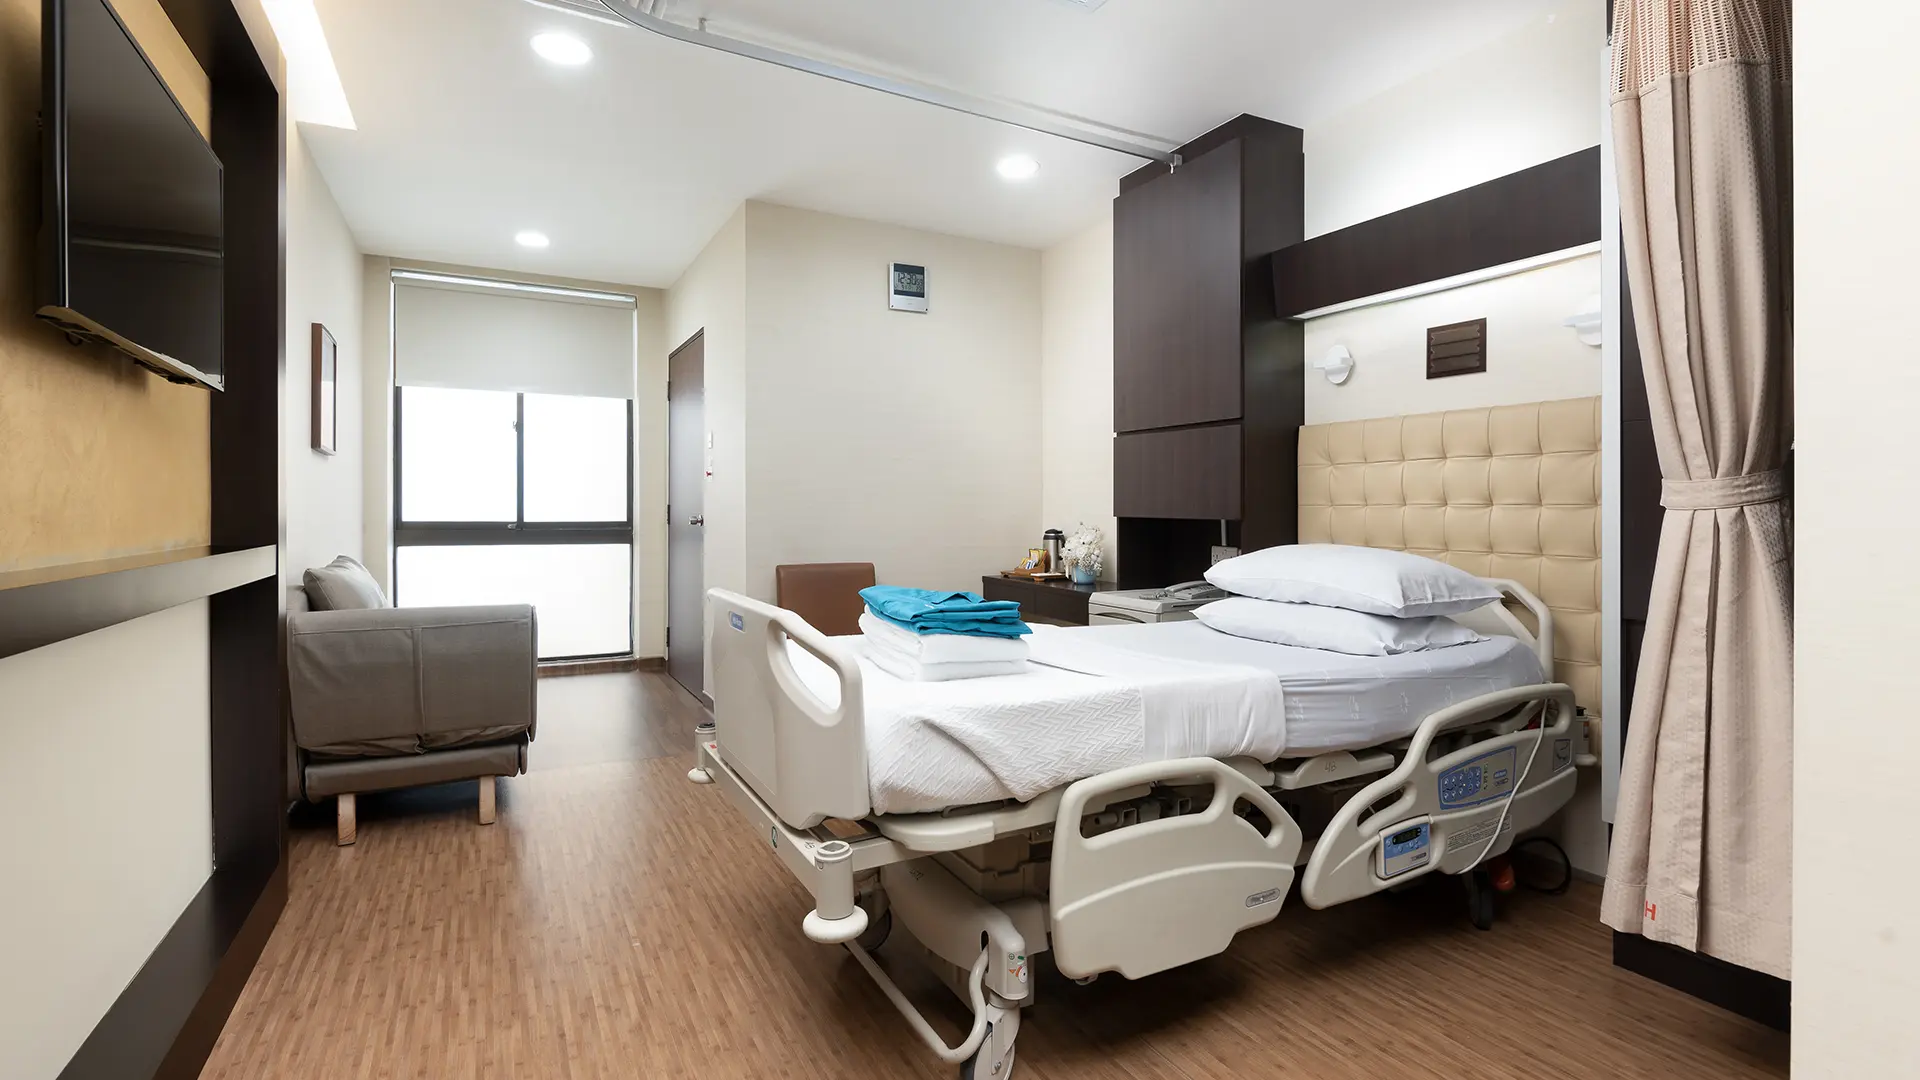 Hospital single bedded Maternity Room